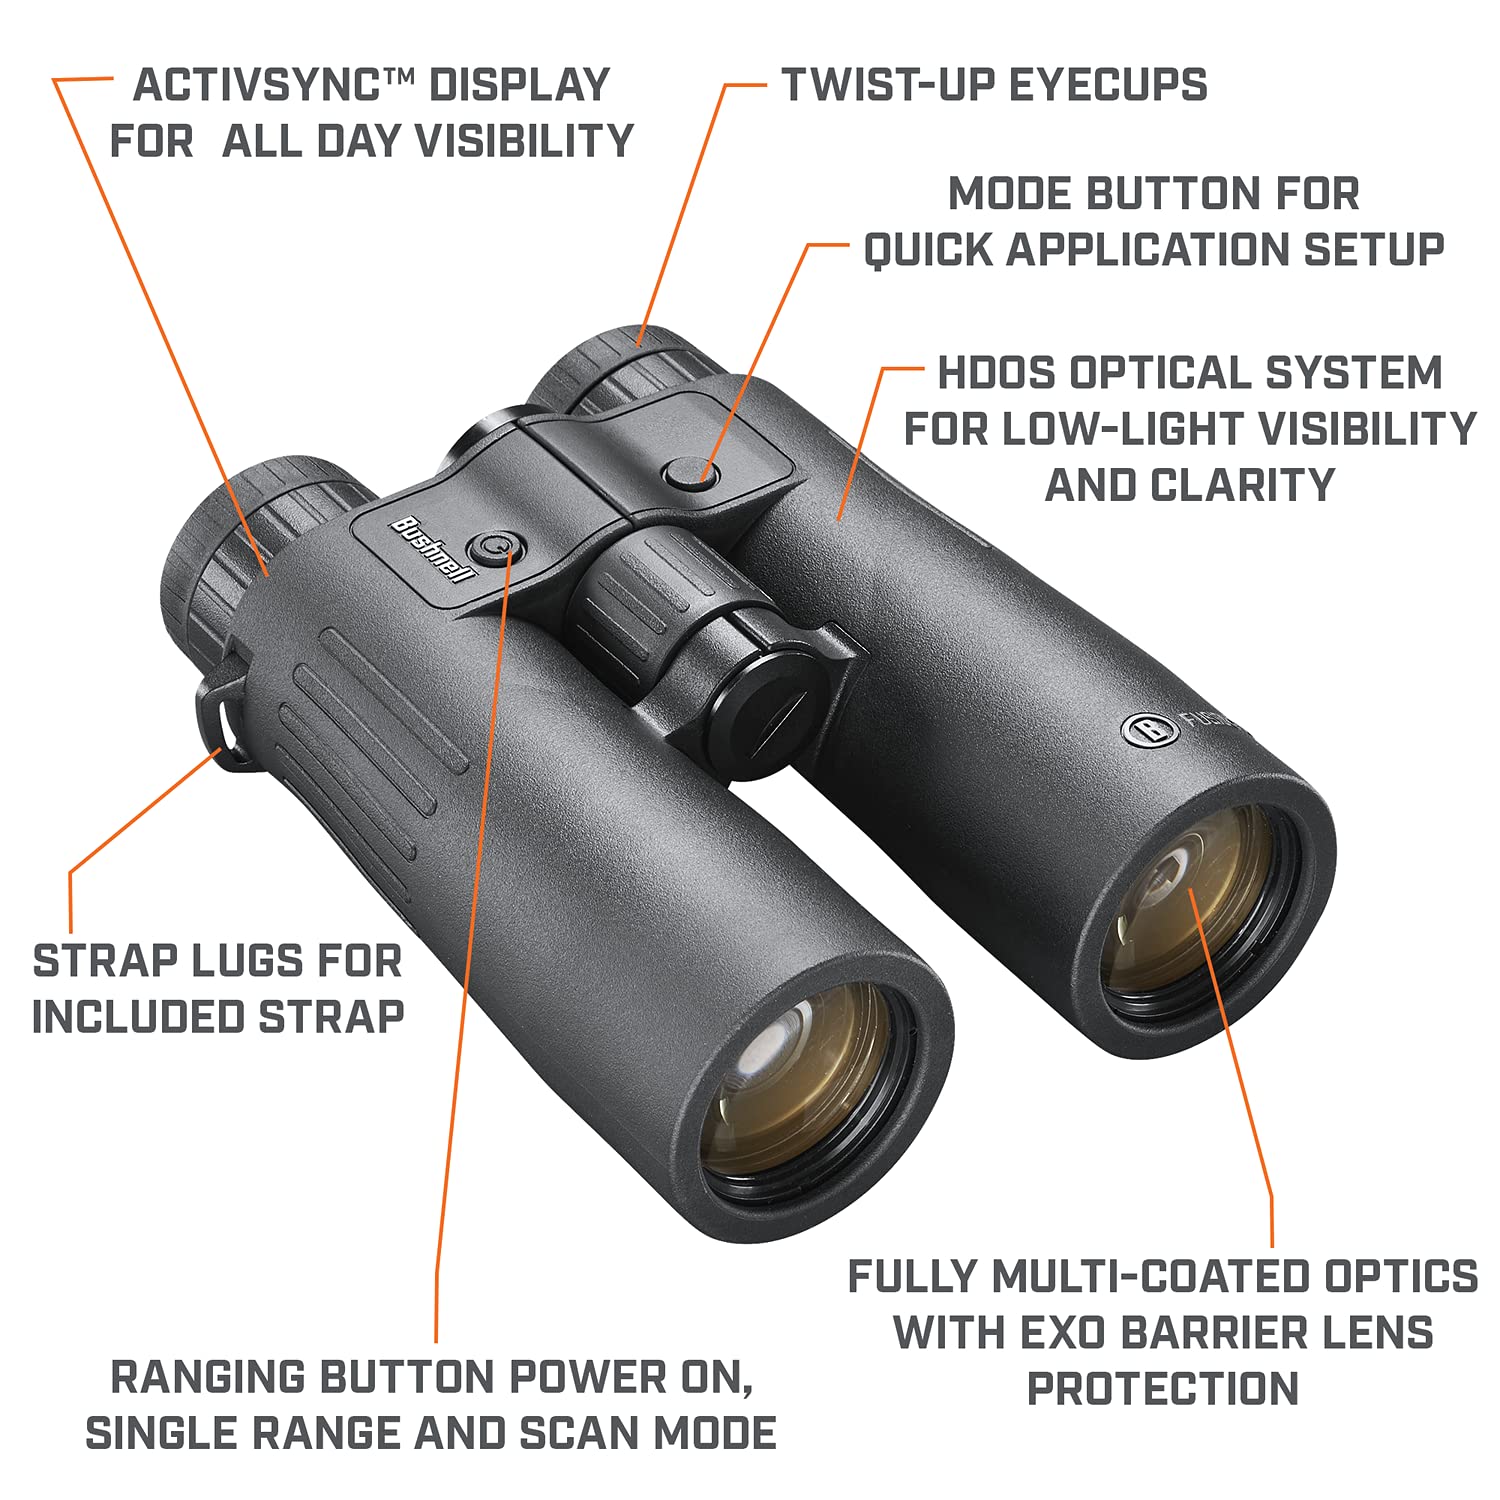 Bushnell Fusion X 10x42mm Rangefinder Binoculars, Hunting Binoculars with Built-in Rangefinder, Angle Range and Bullet Drop Compensation Modes